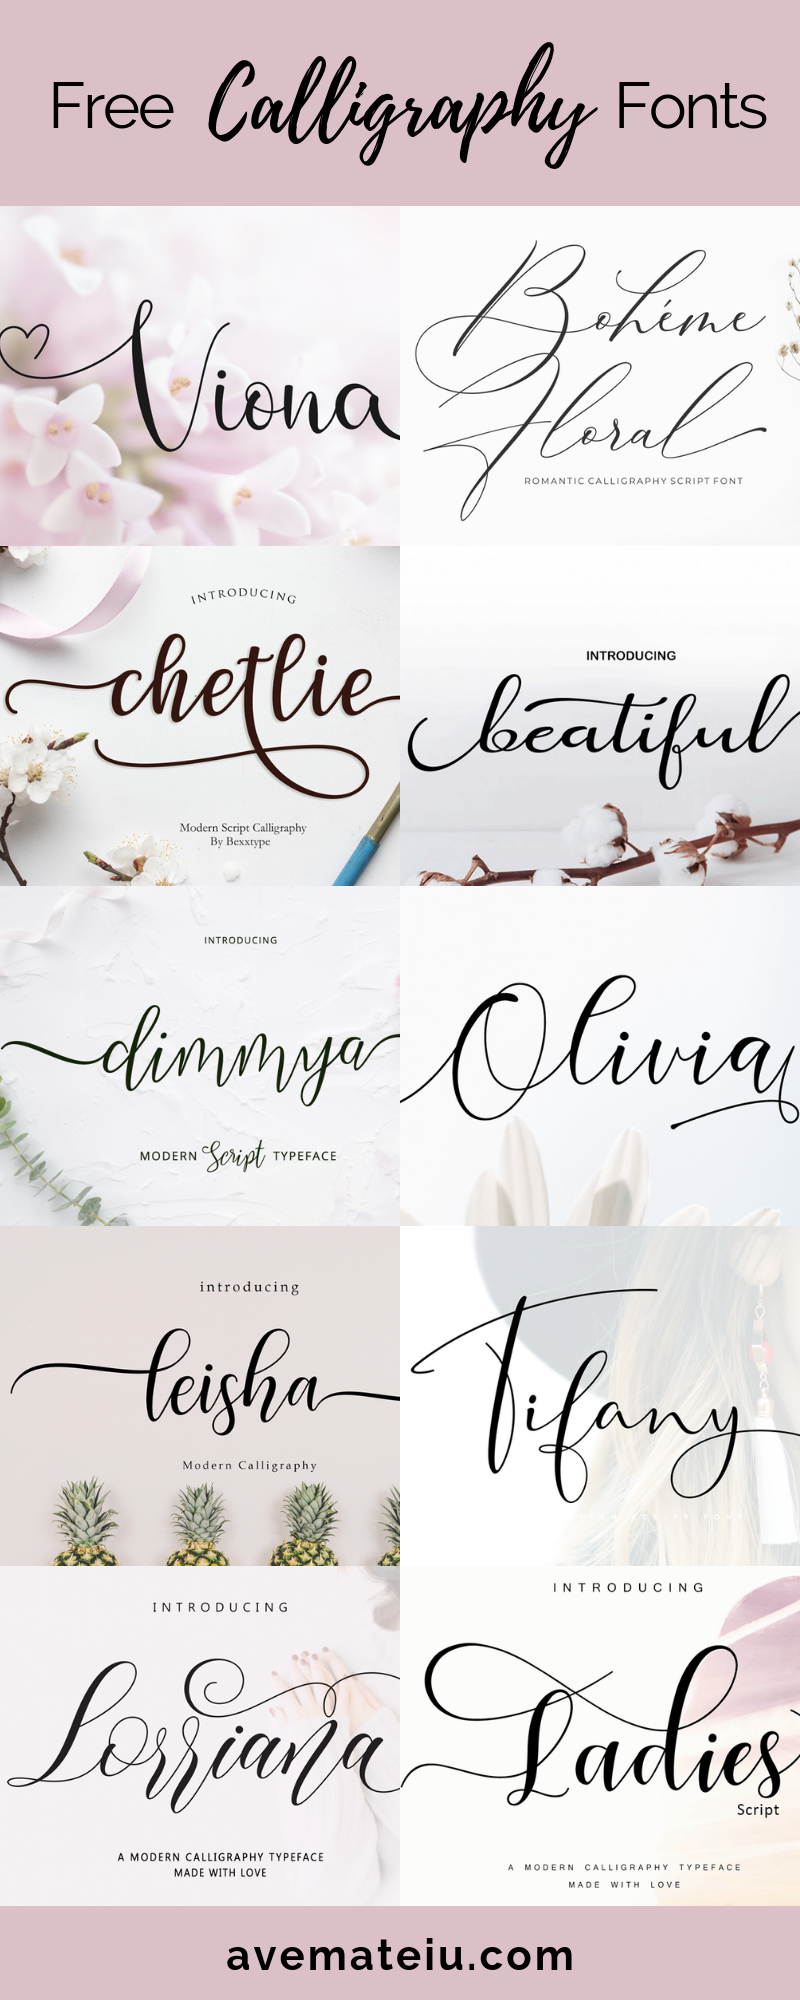 10 New FREE Beautiful Calligraphy Fonts - Part 3 - Ave Mateiu